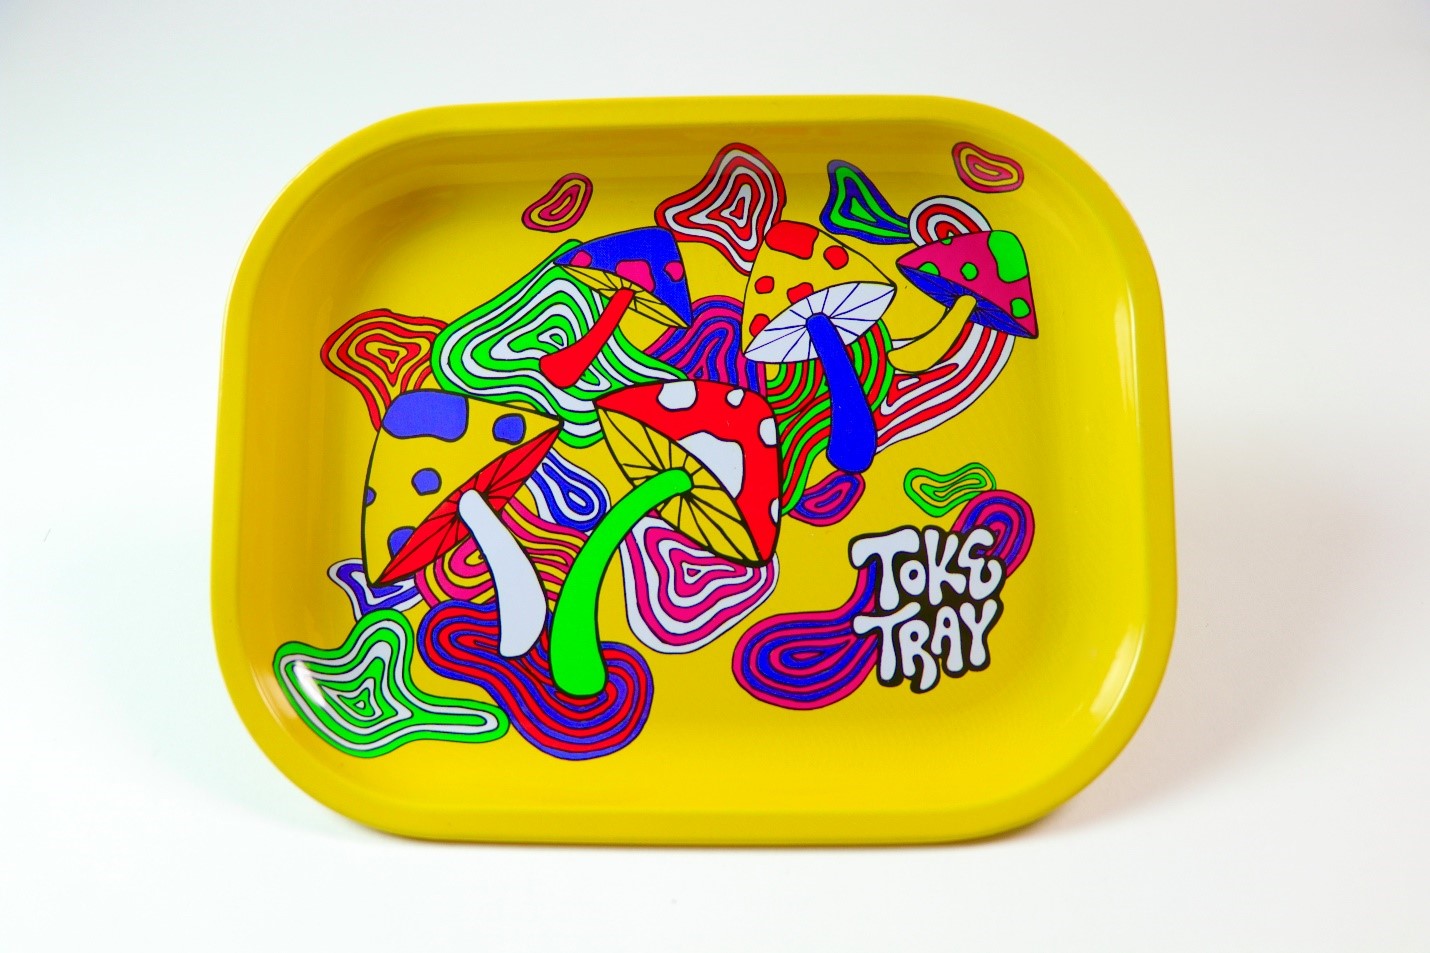 Trippy yellow psychedelic mushroom rolling tray.